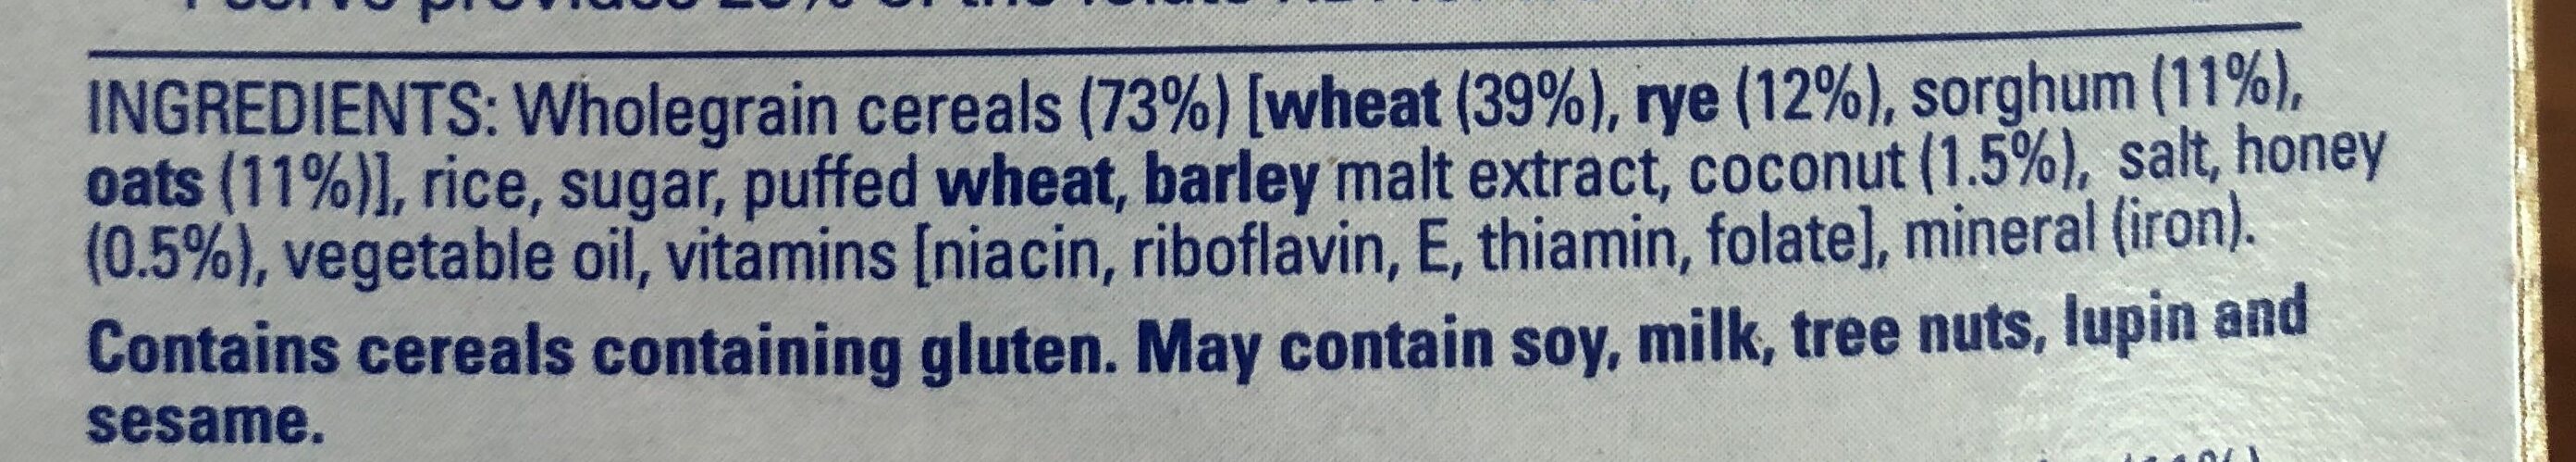 Sanitarium Weetbix Wheat Biscuits Multi Grain - Ingredients